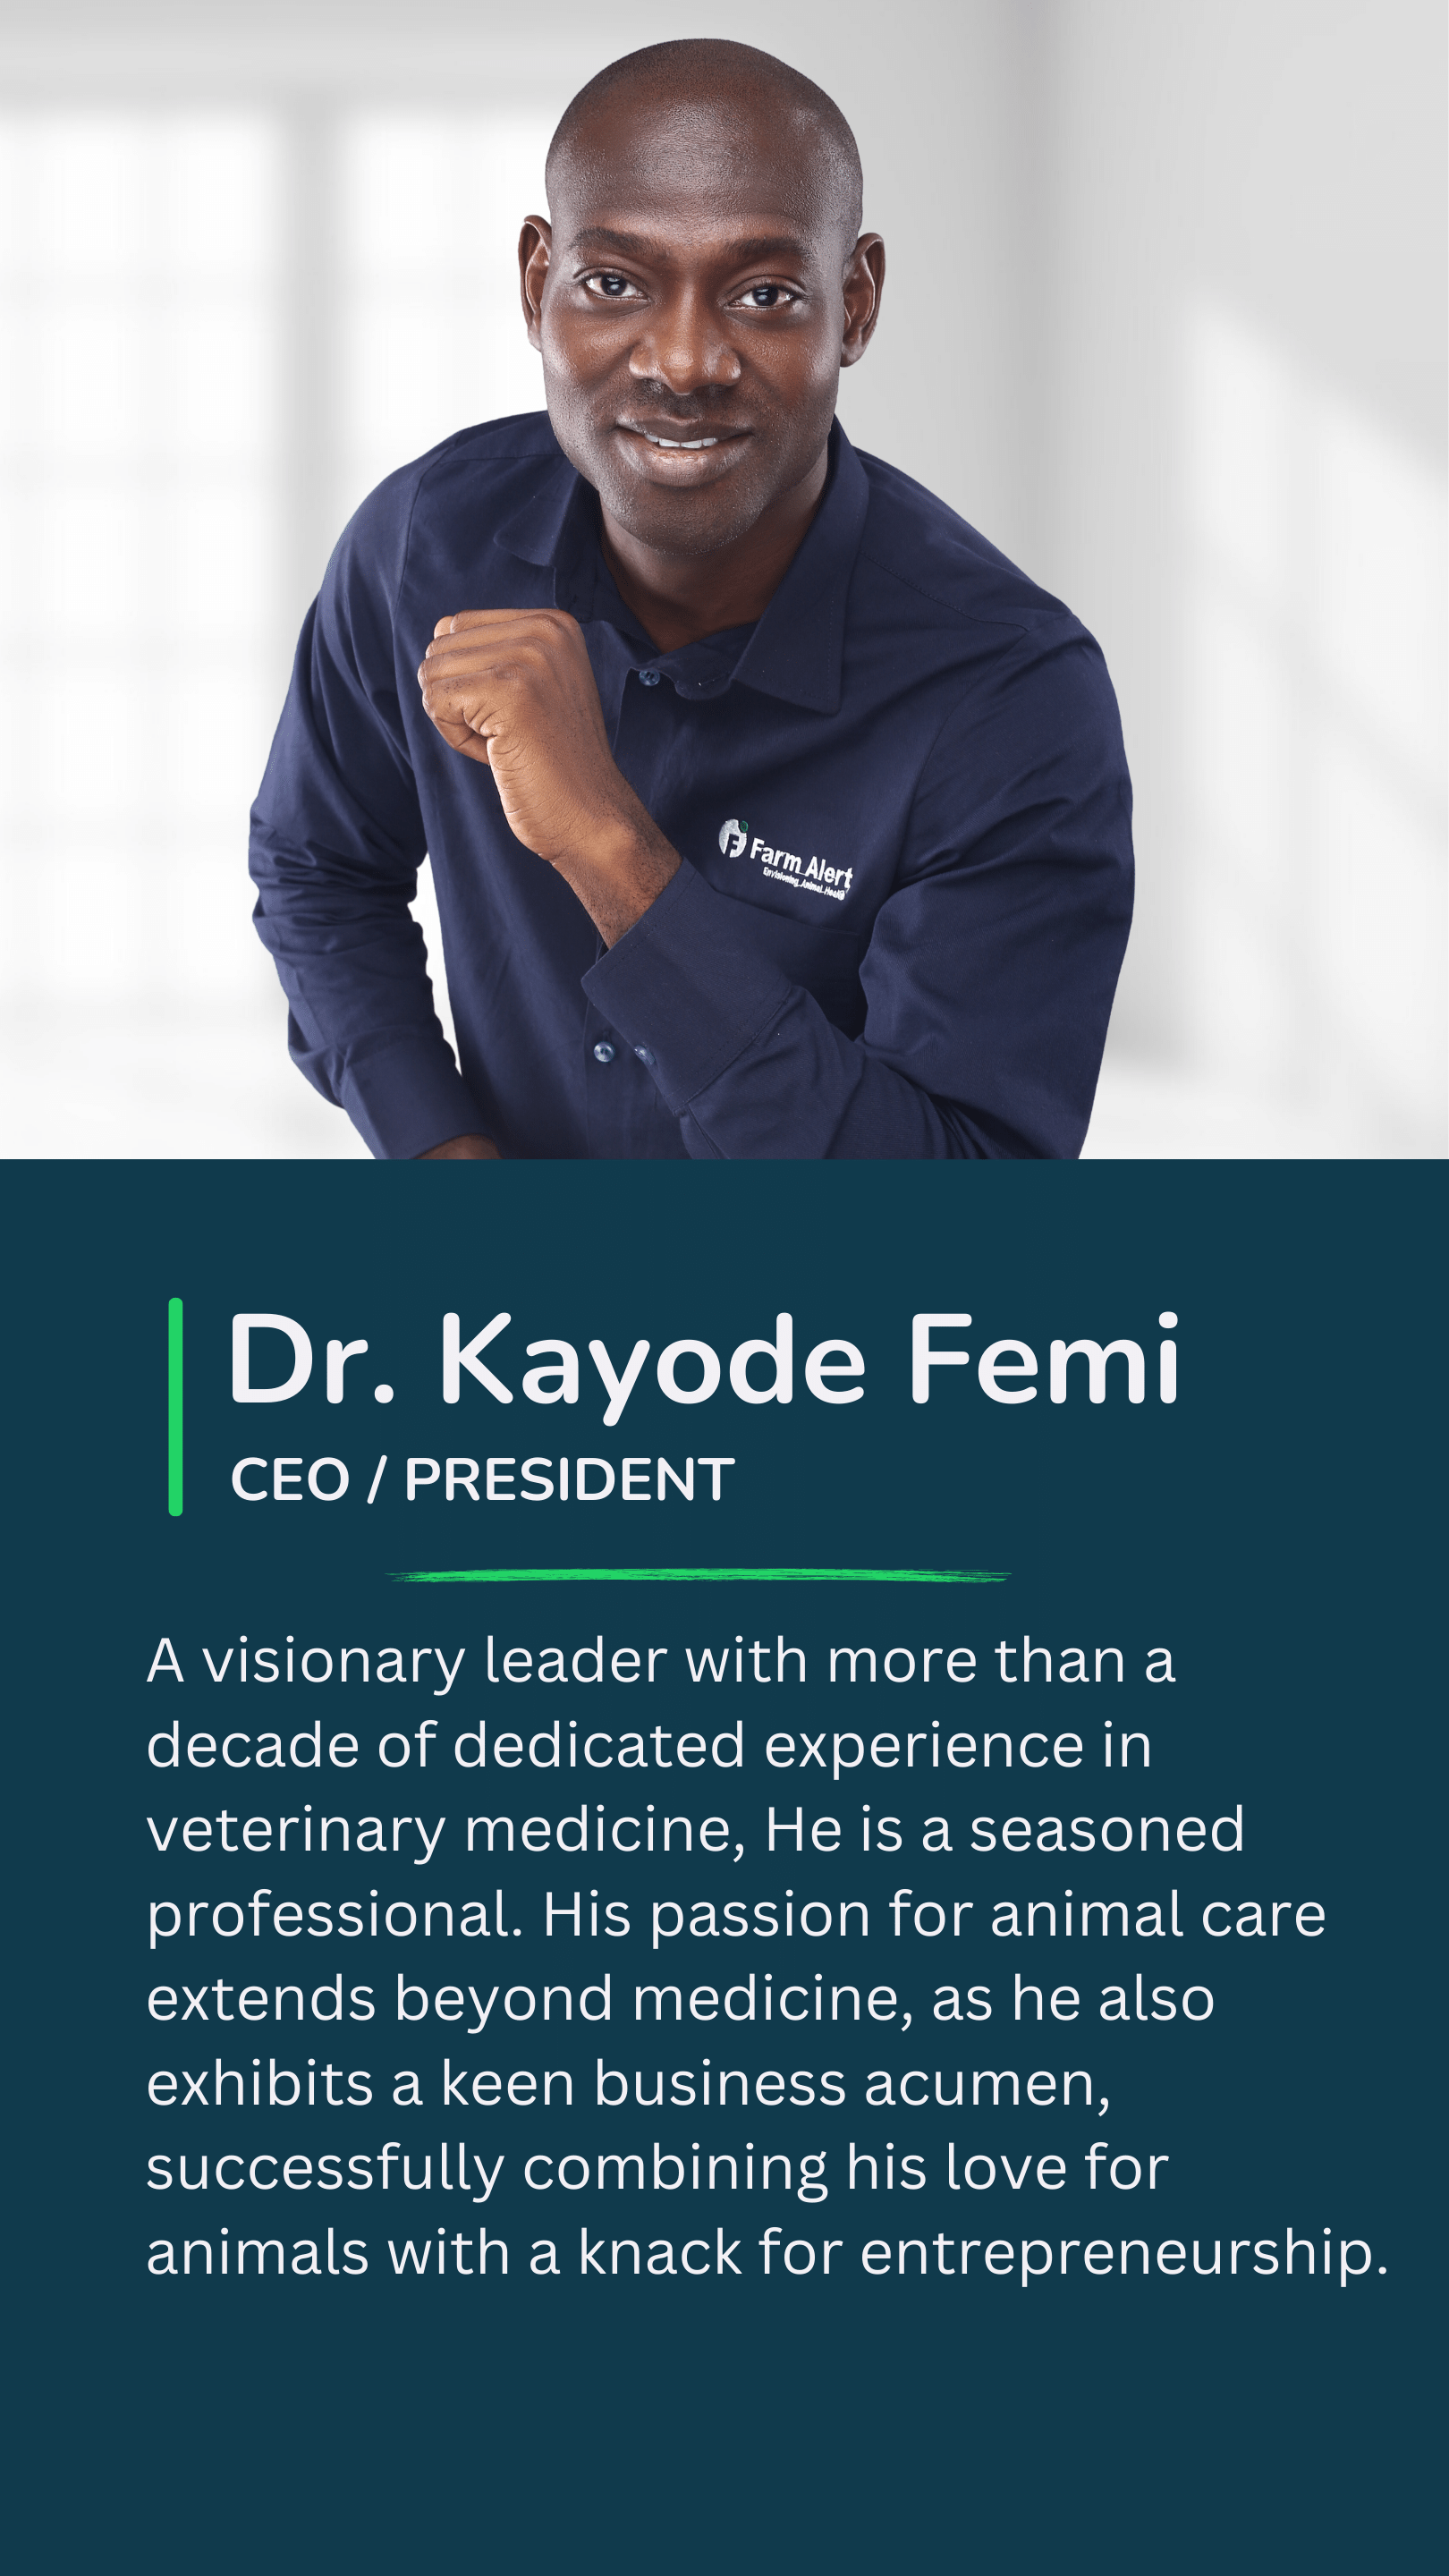 Dr. Kayode